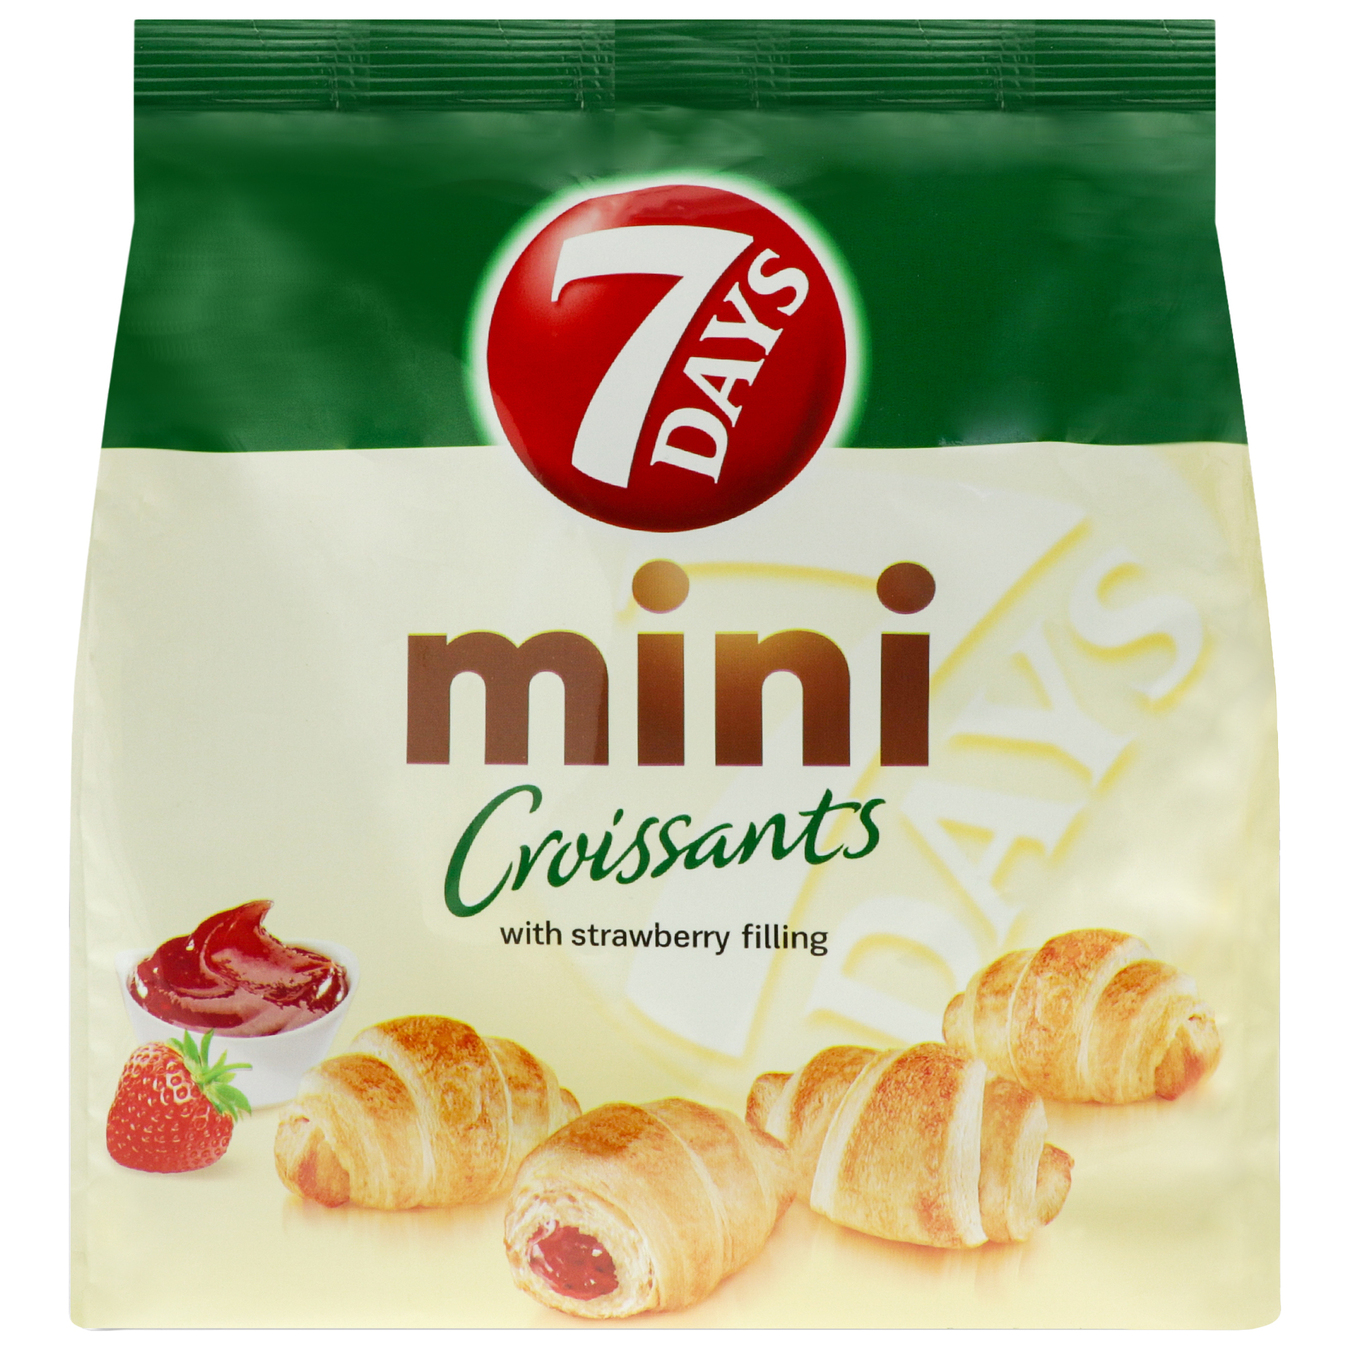 7DAYS Strawberry Mini Croissant
185g